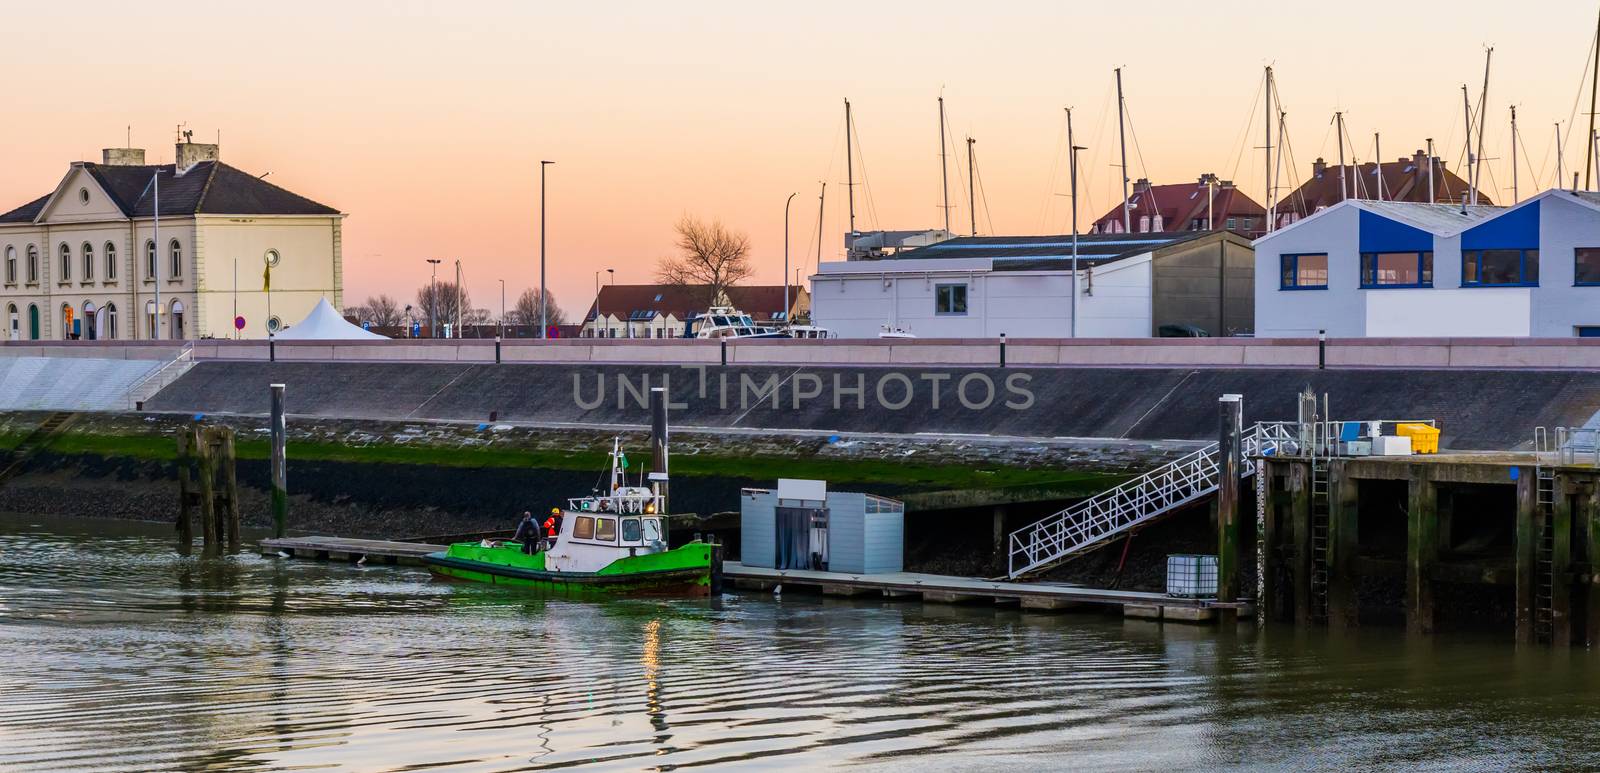 Docked boat with workers in the harbor of Blankenberge, Belgium, popular european city by charlottebleijenberg